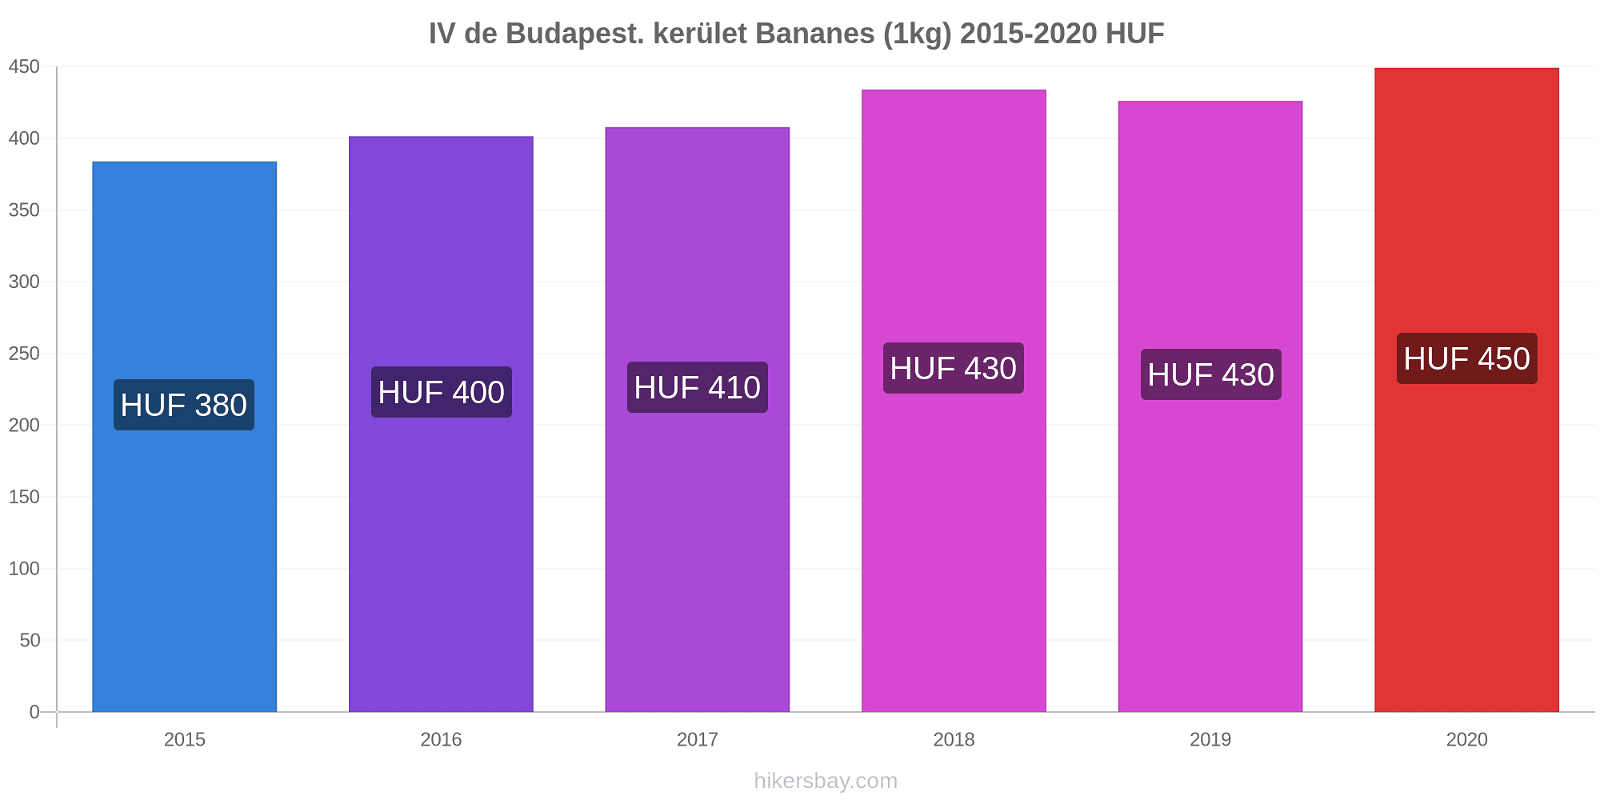 IV de Budapest. kerület changements de prix Bananes (1kg) hikersbay.com